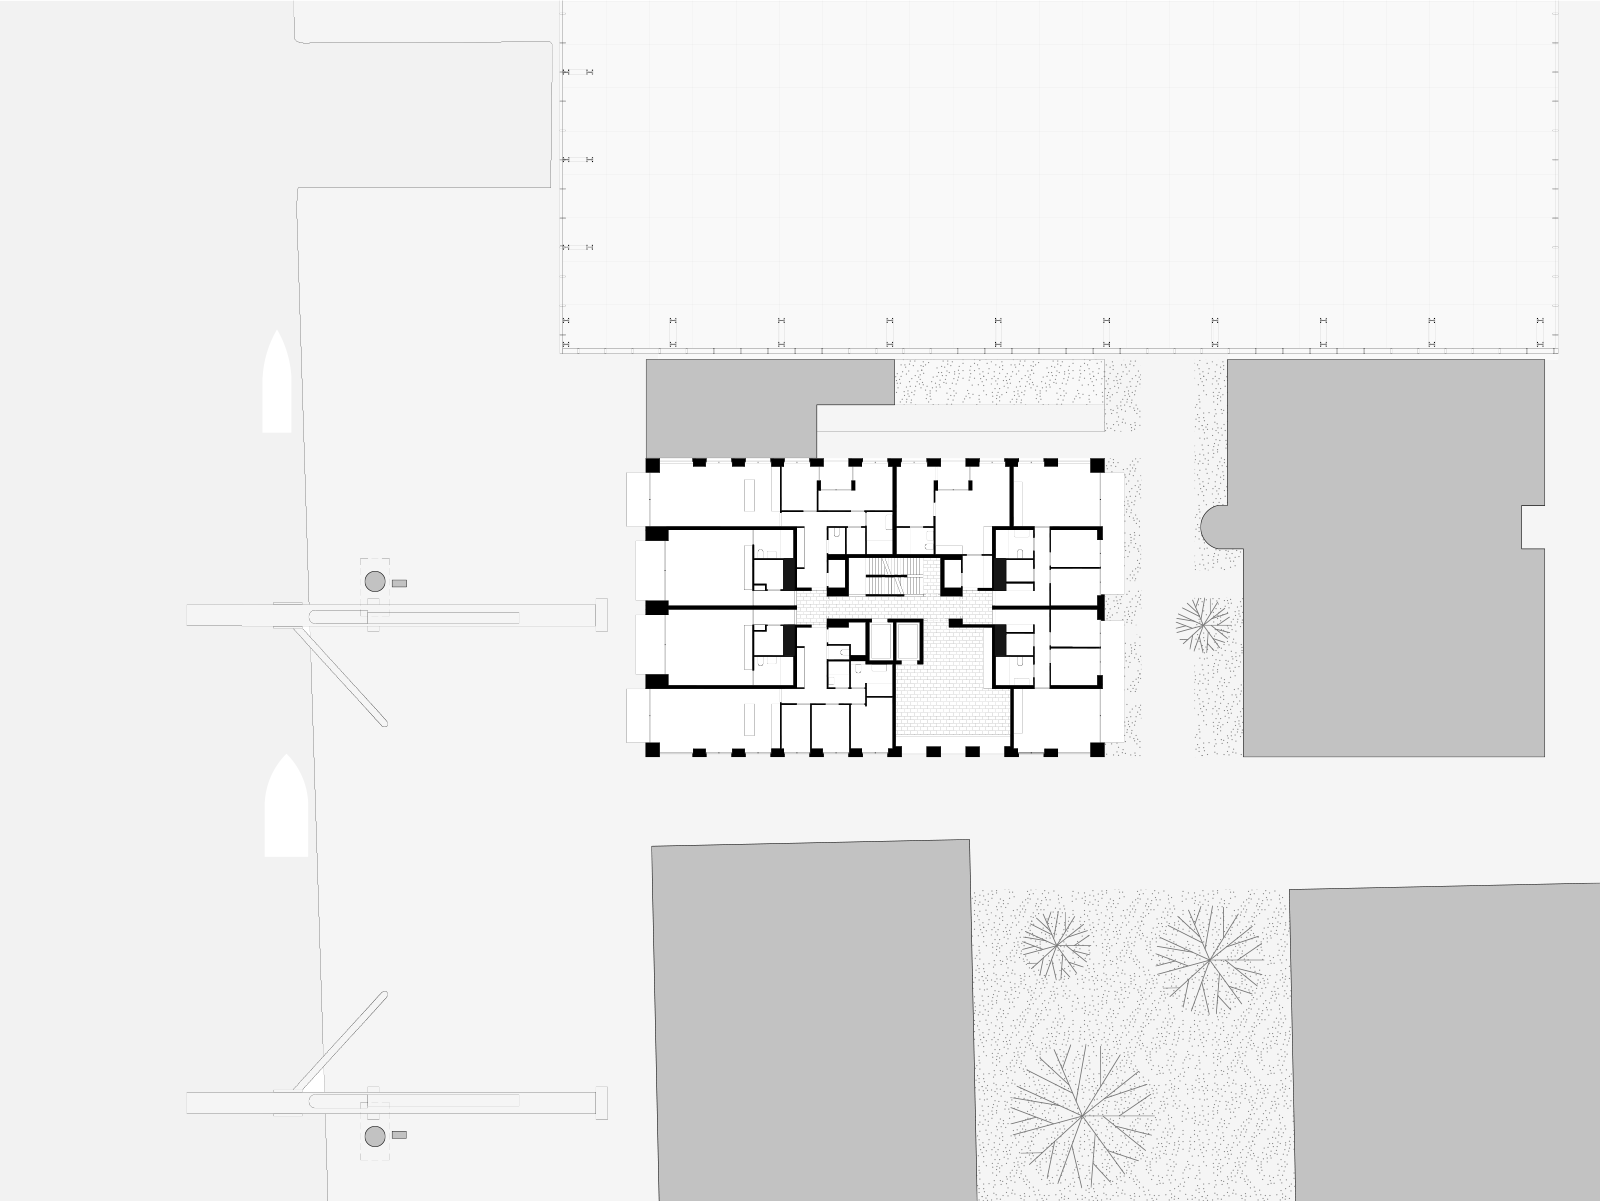 drawing plan fifth floor Oostenburg apartment block by beta architect amsterdam evert klinkenberg gus auguste van oppen